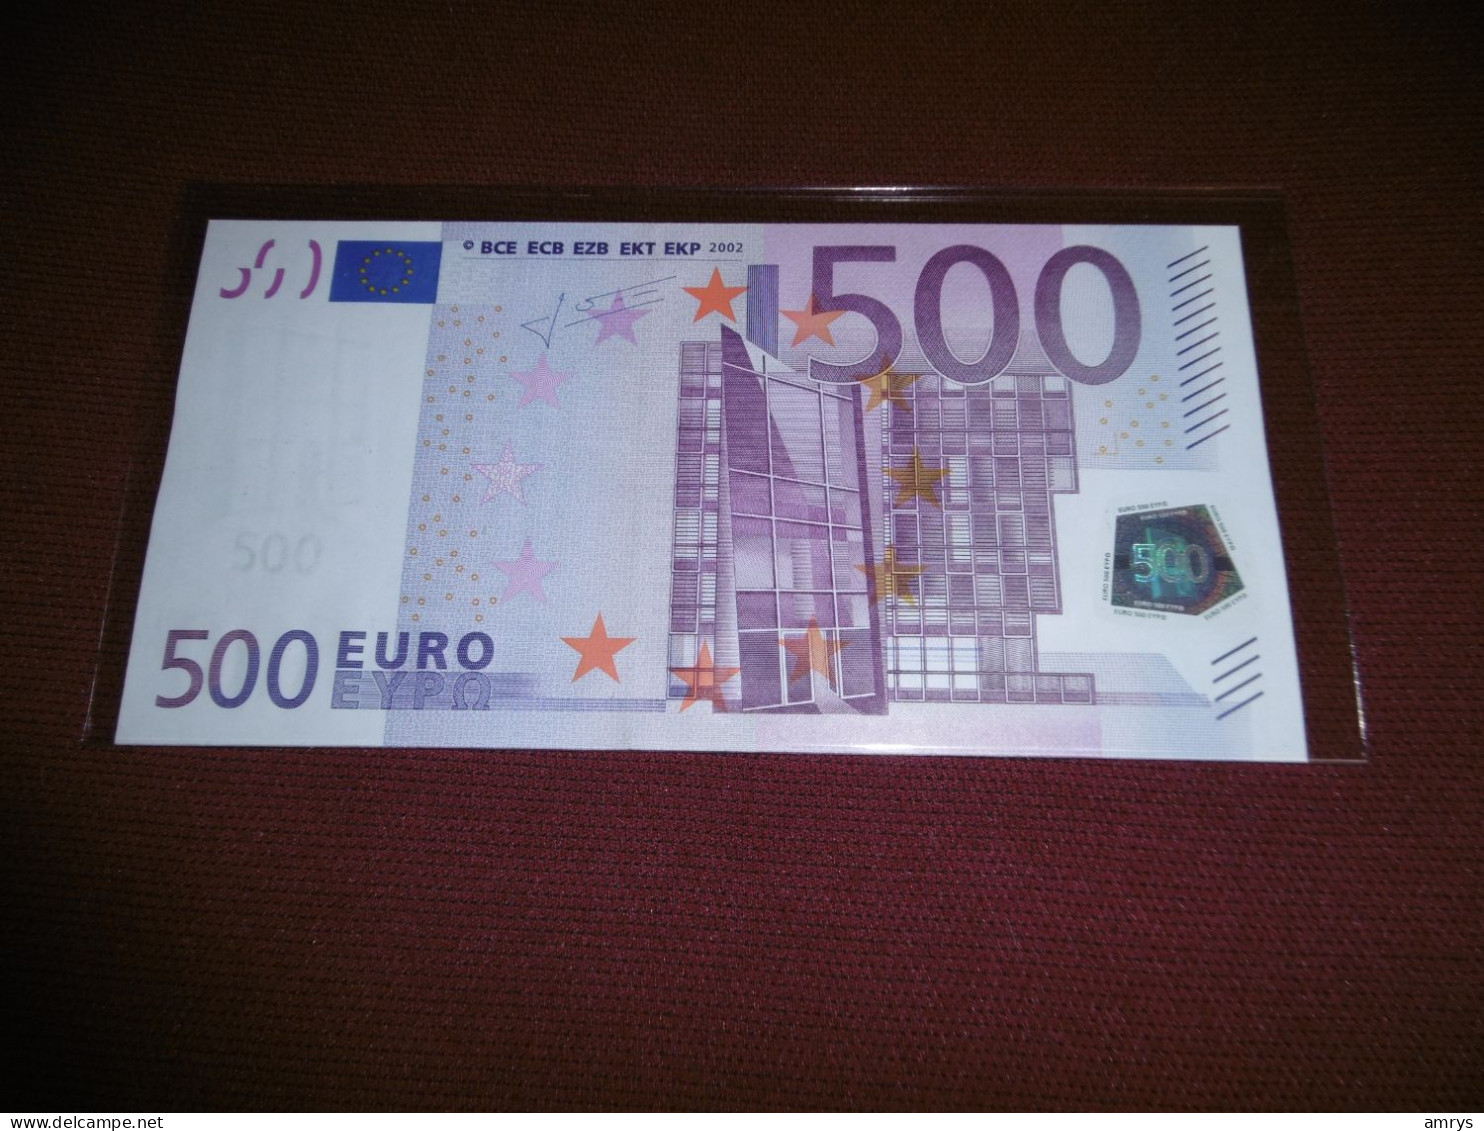 500 Euro Austria Trichet F002 EXTREMELY RARE Perfect UNC - 500 Euro